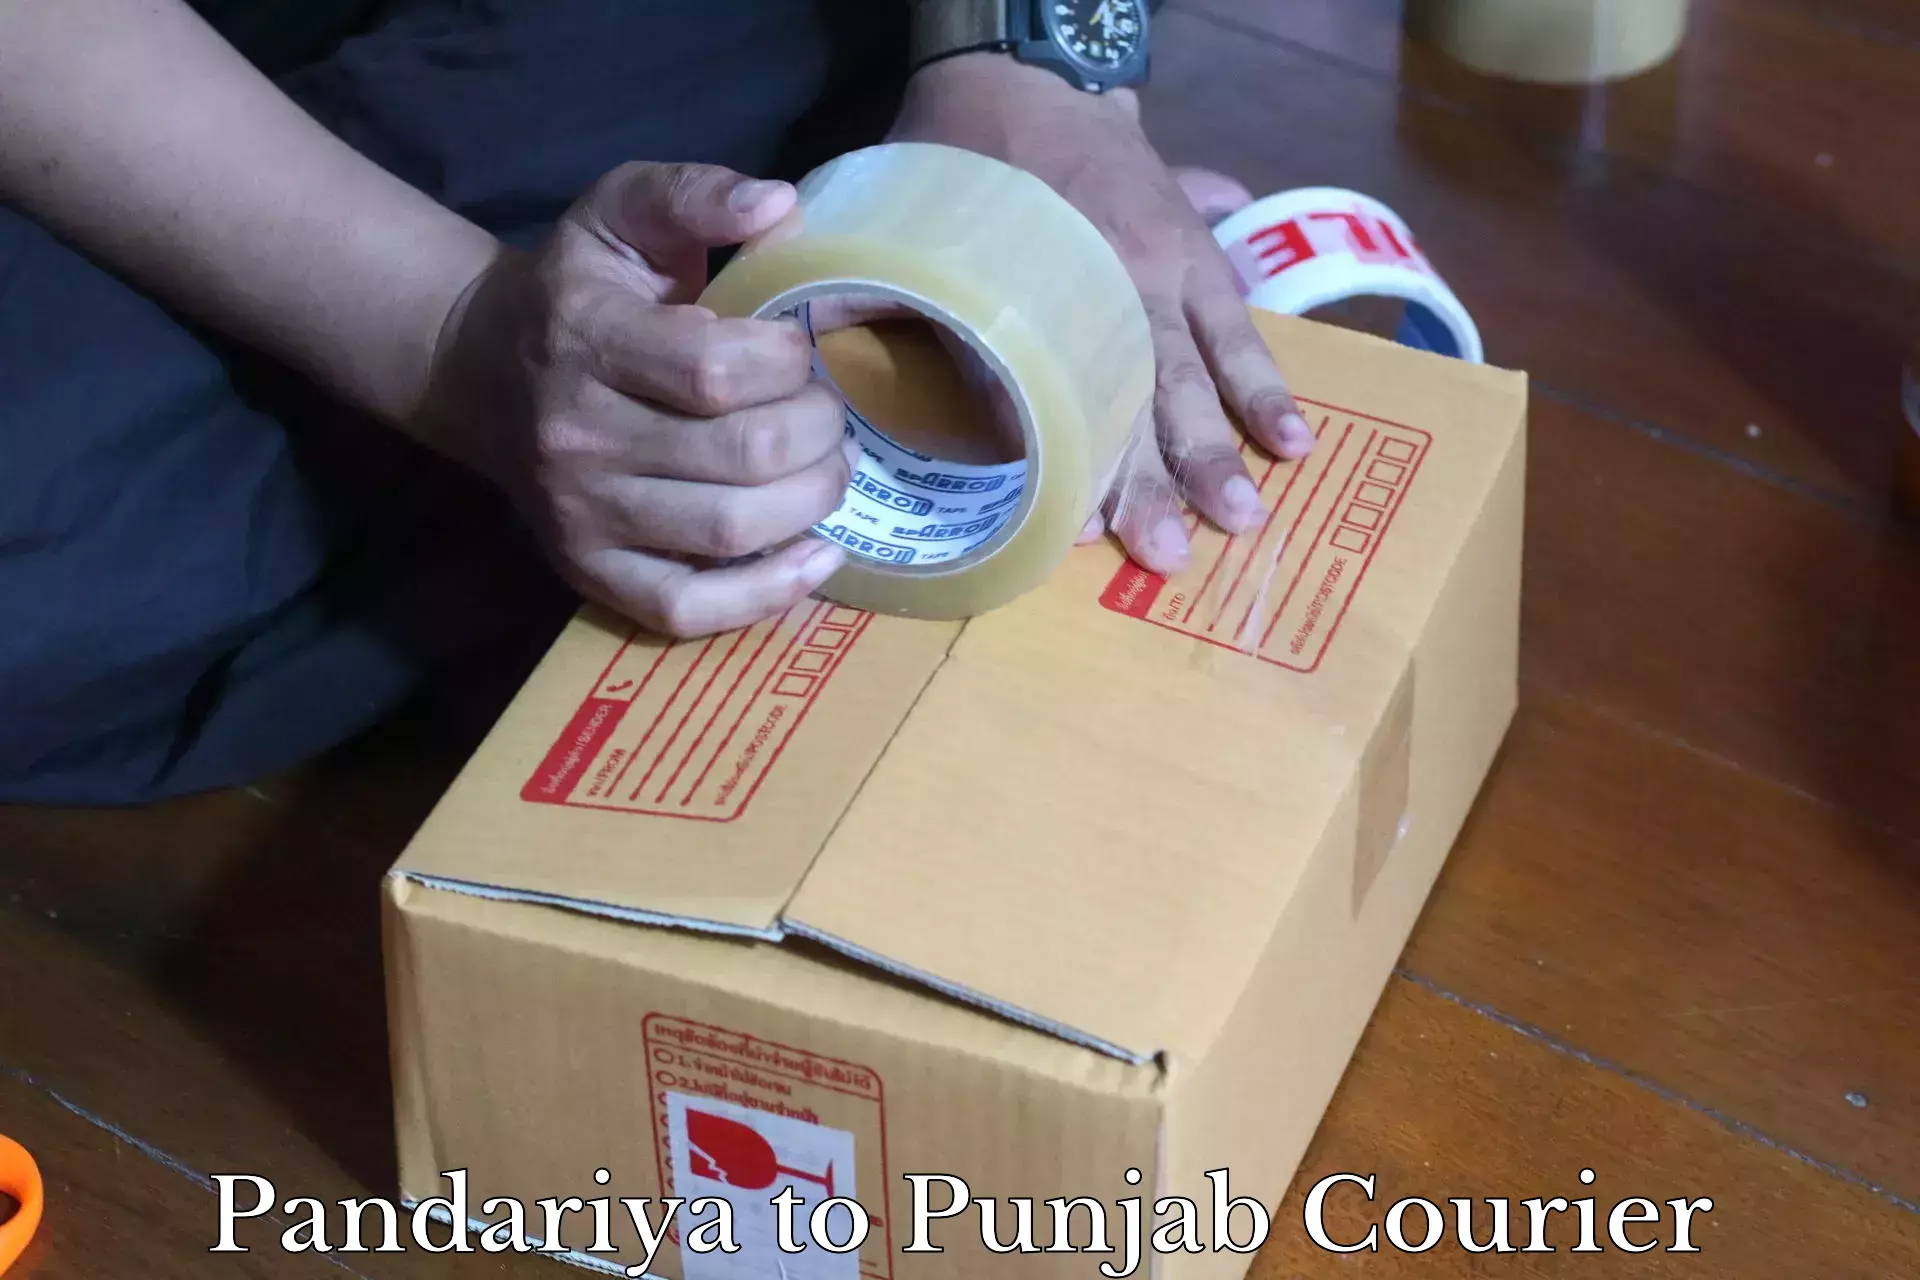 Reliable courier service Pandariya to Ajnala